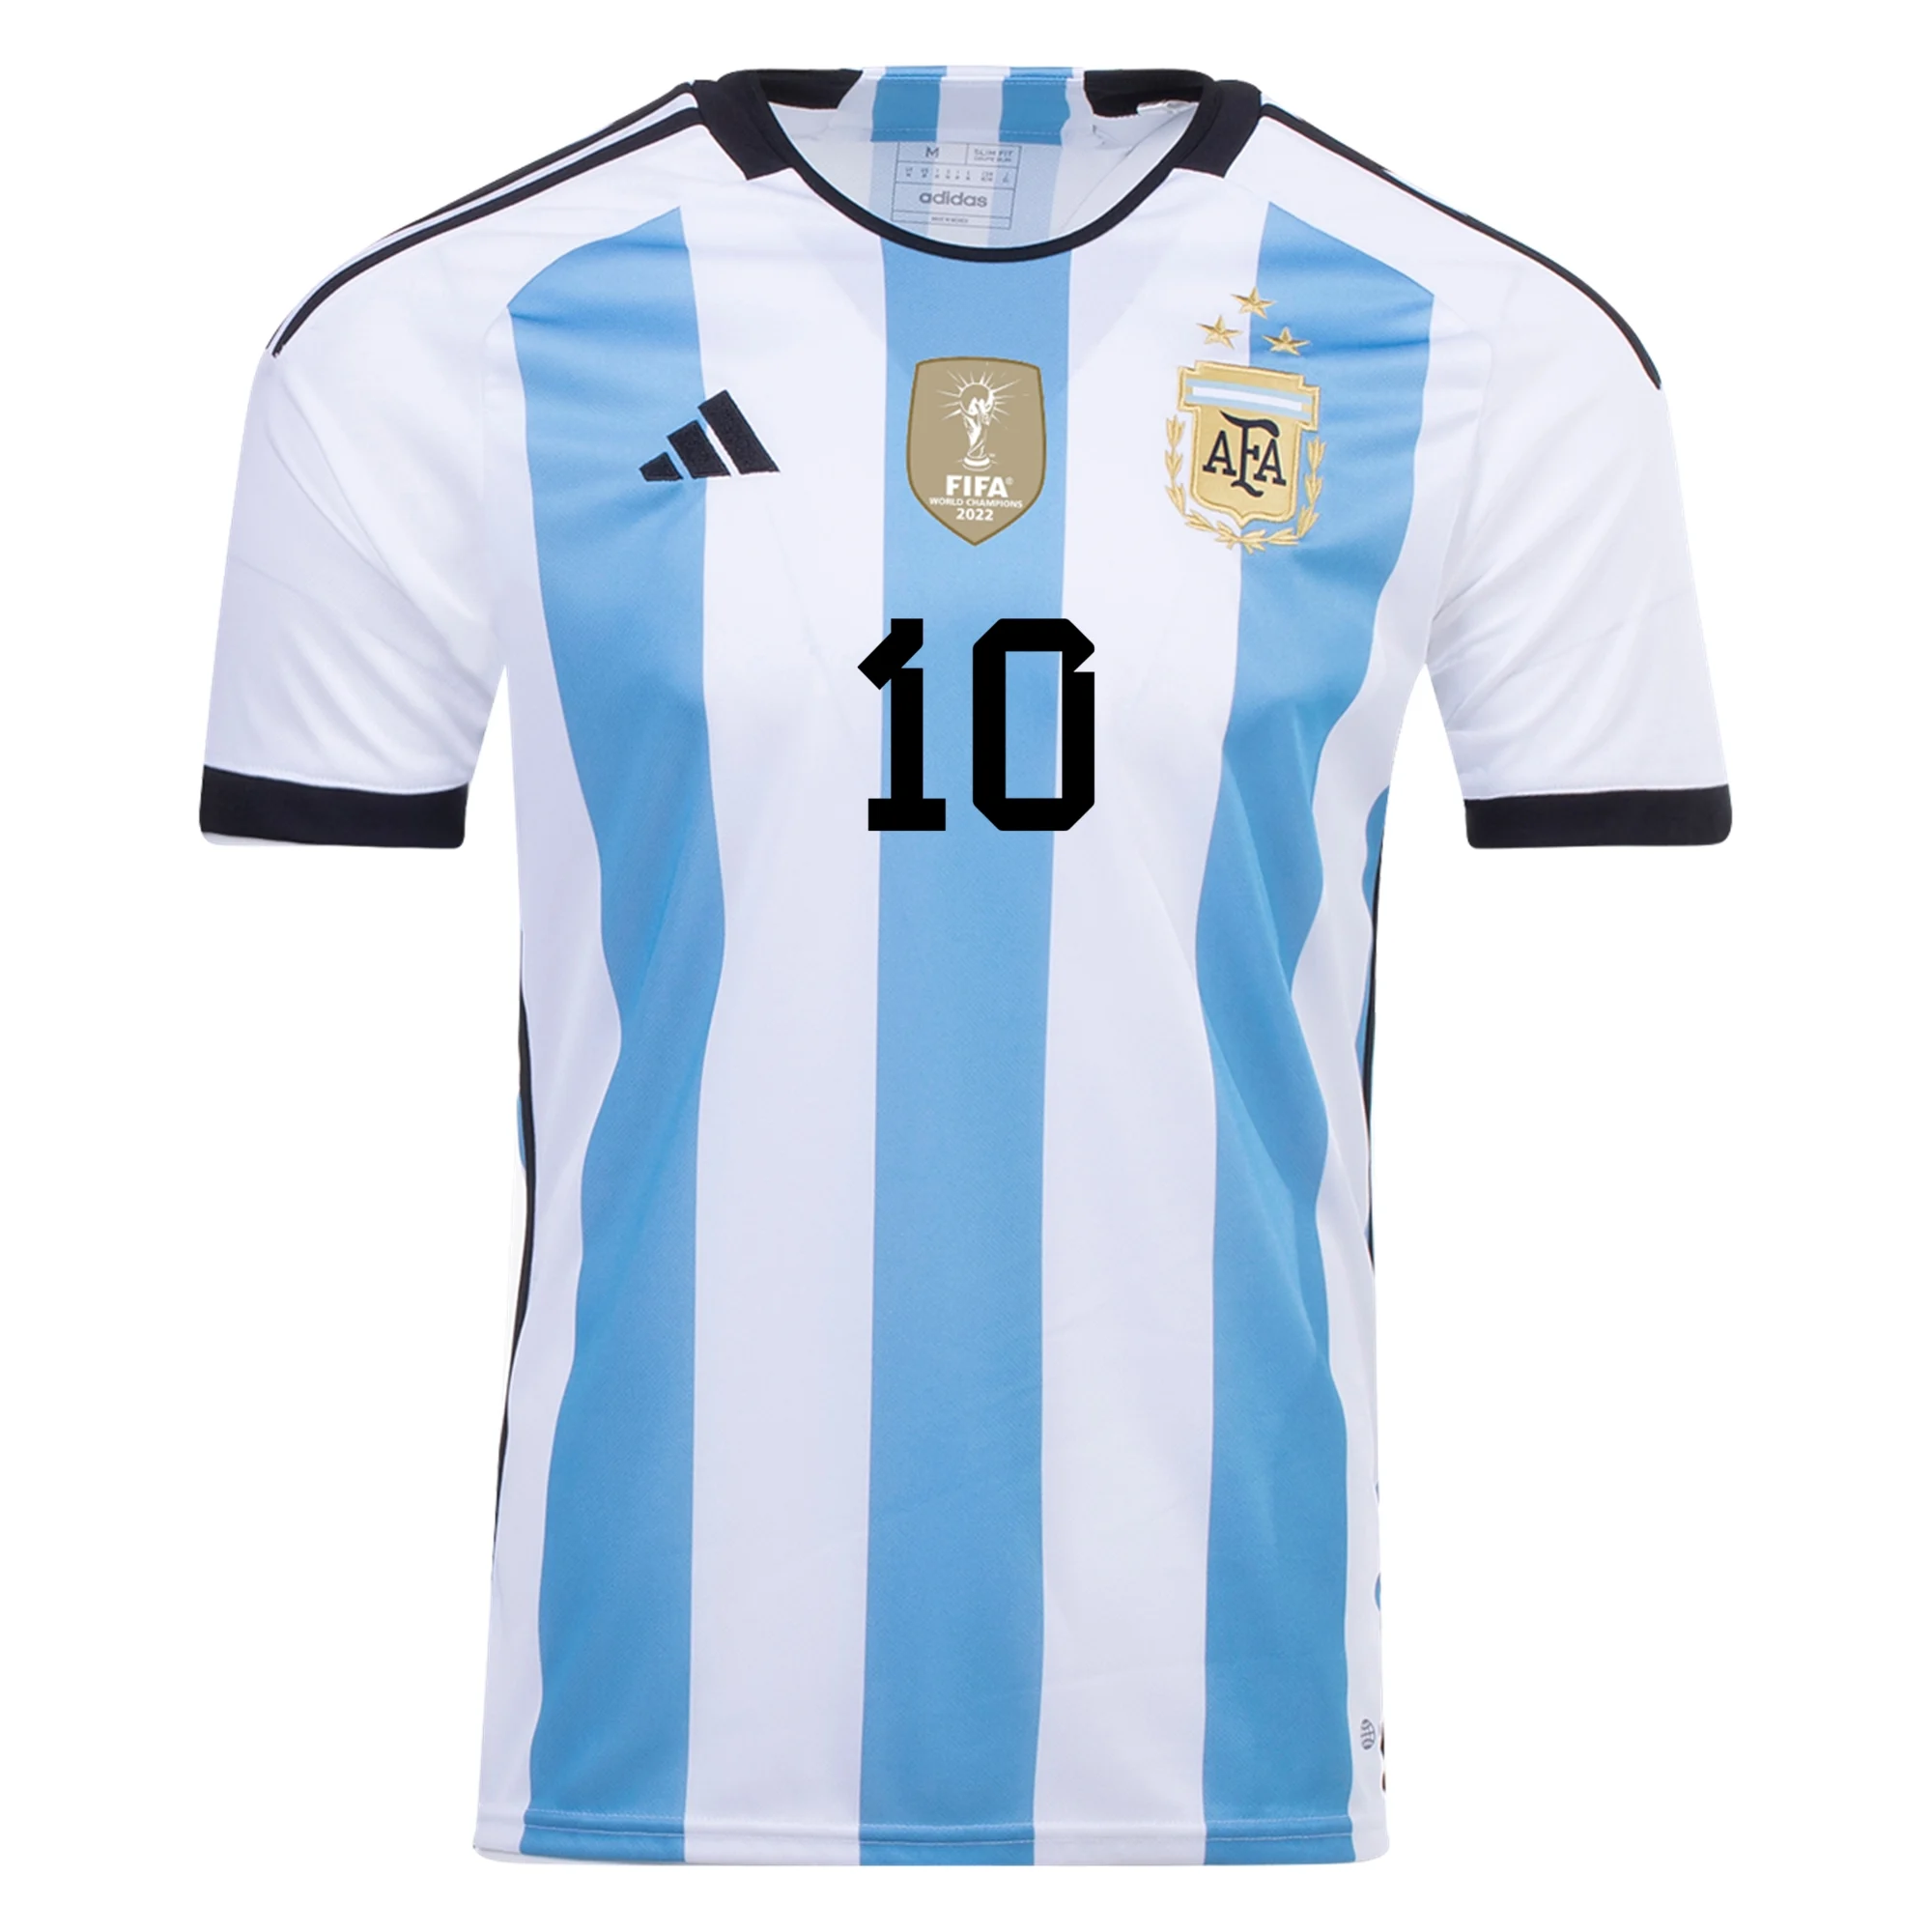 messi argentina jersey original